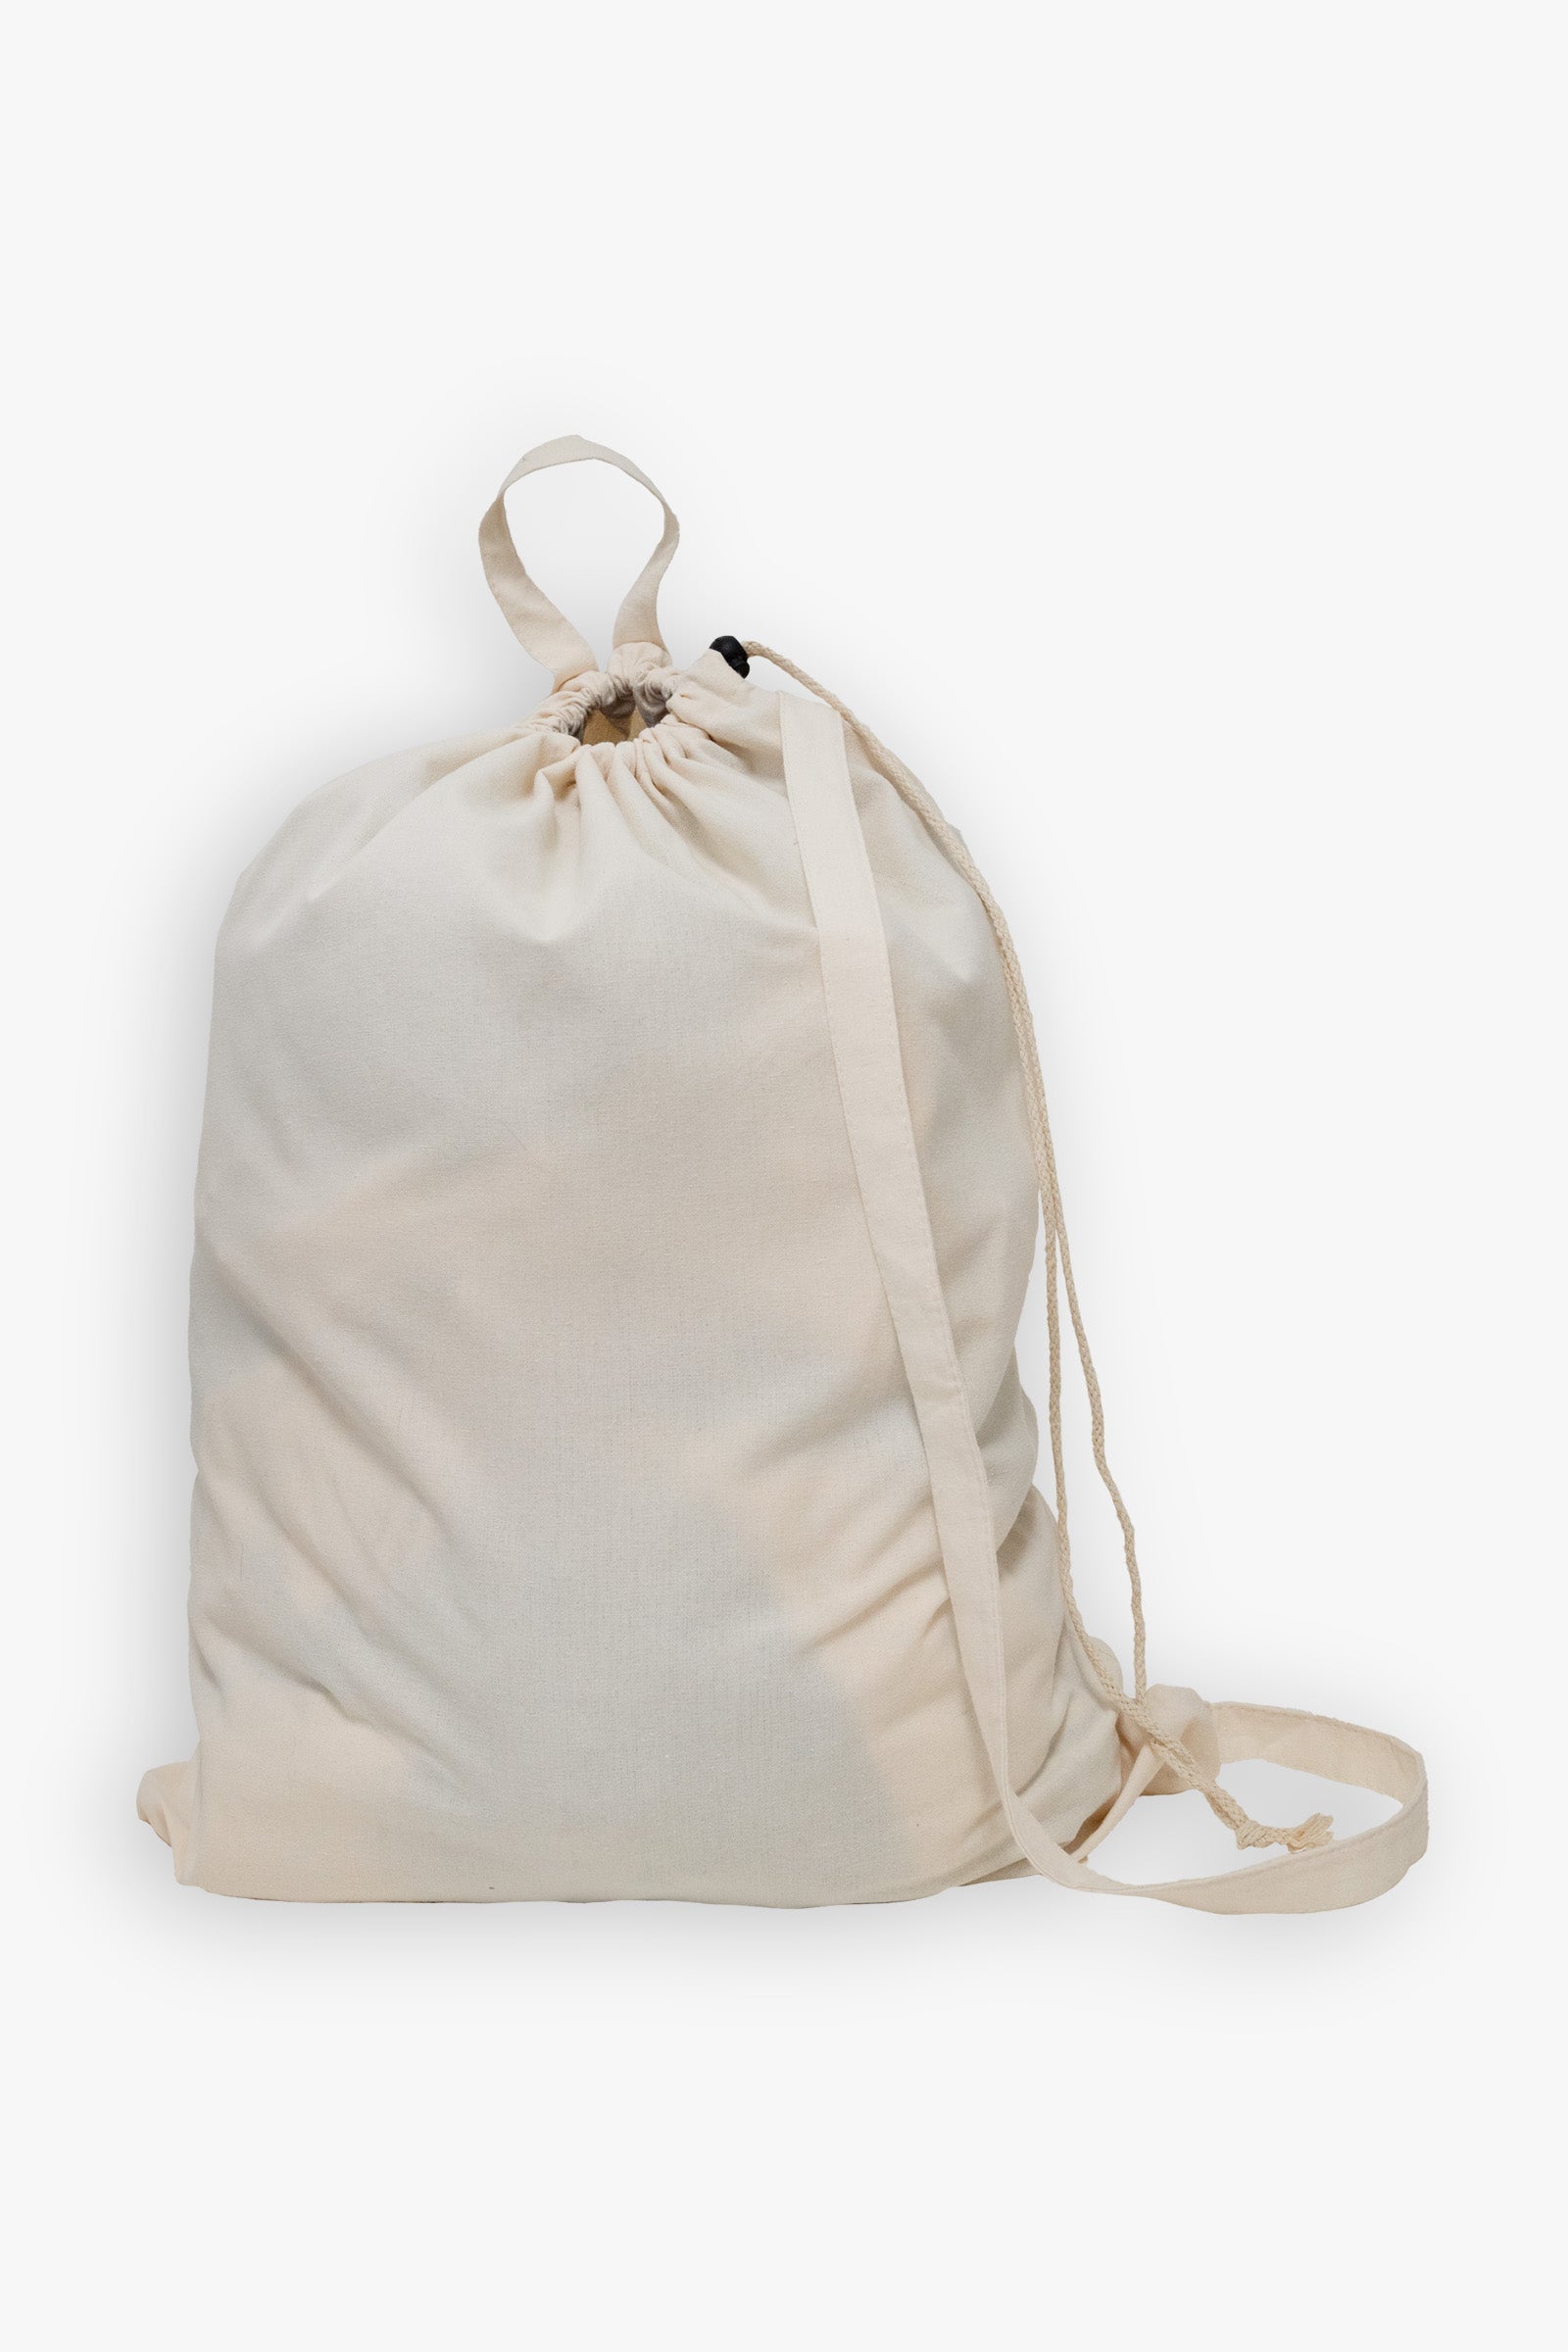 Gertex Customizable Laundry Bag